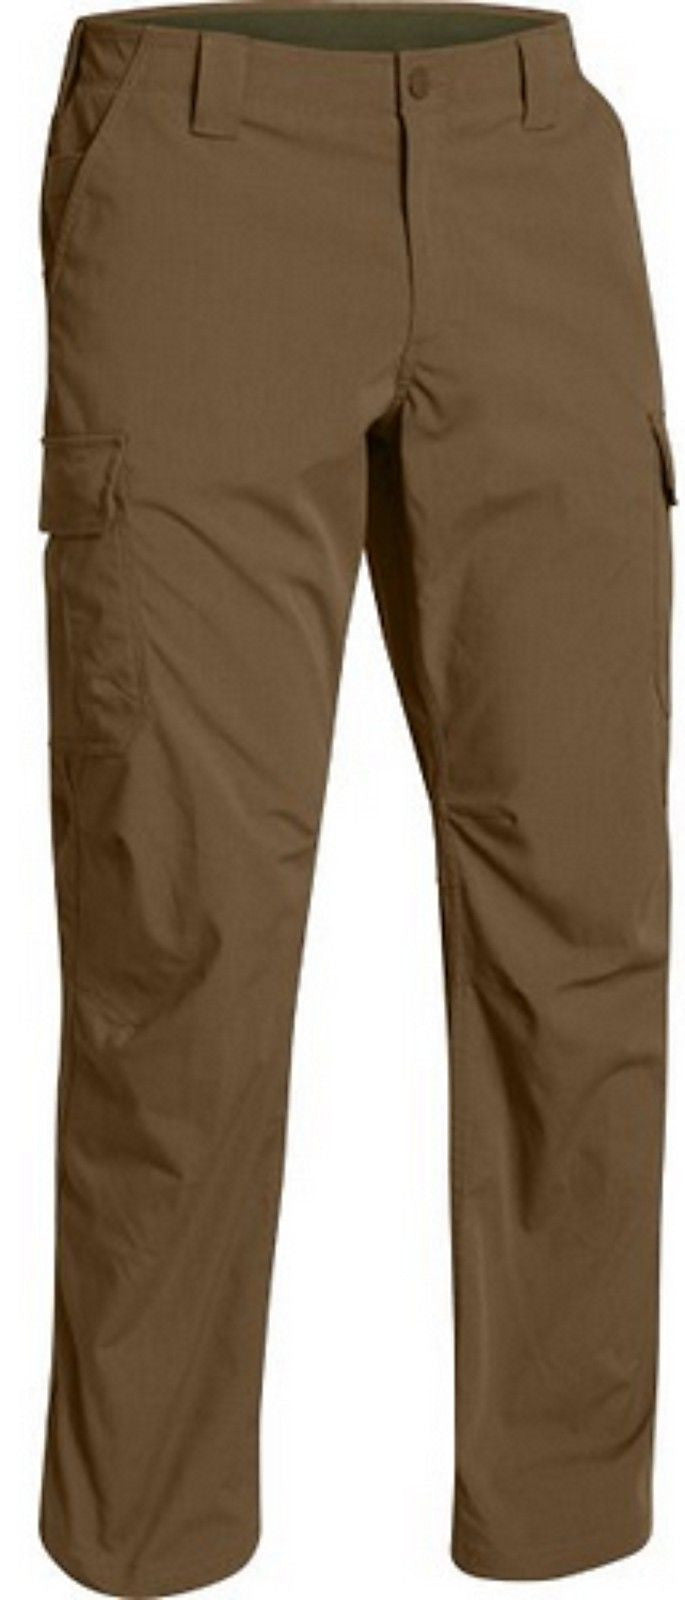 UNDER ARMOUR UA Tactical Patrol Pants - Bayou - Size 30 x 34 